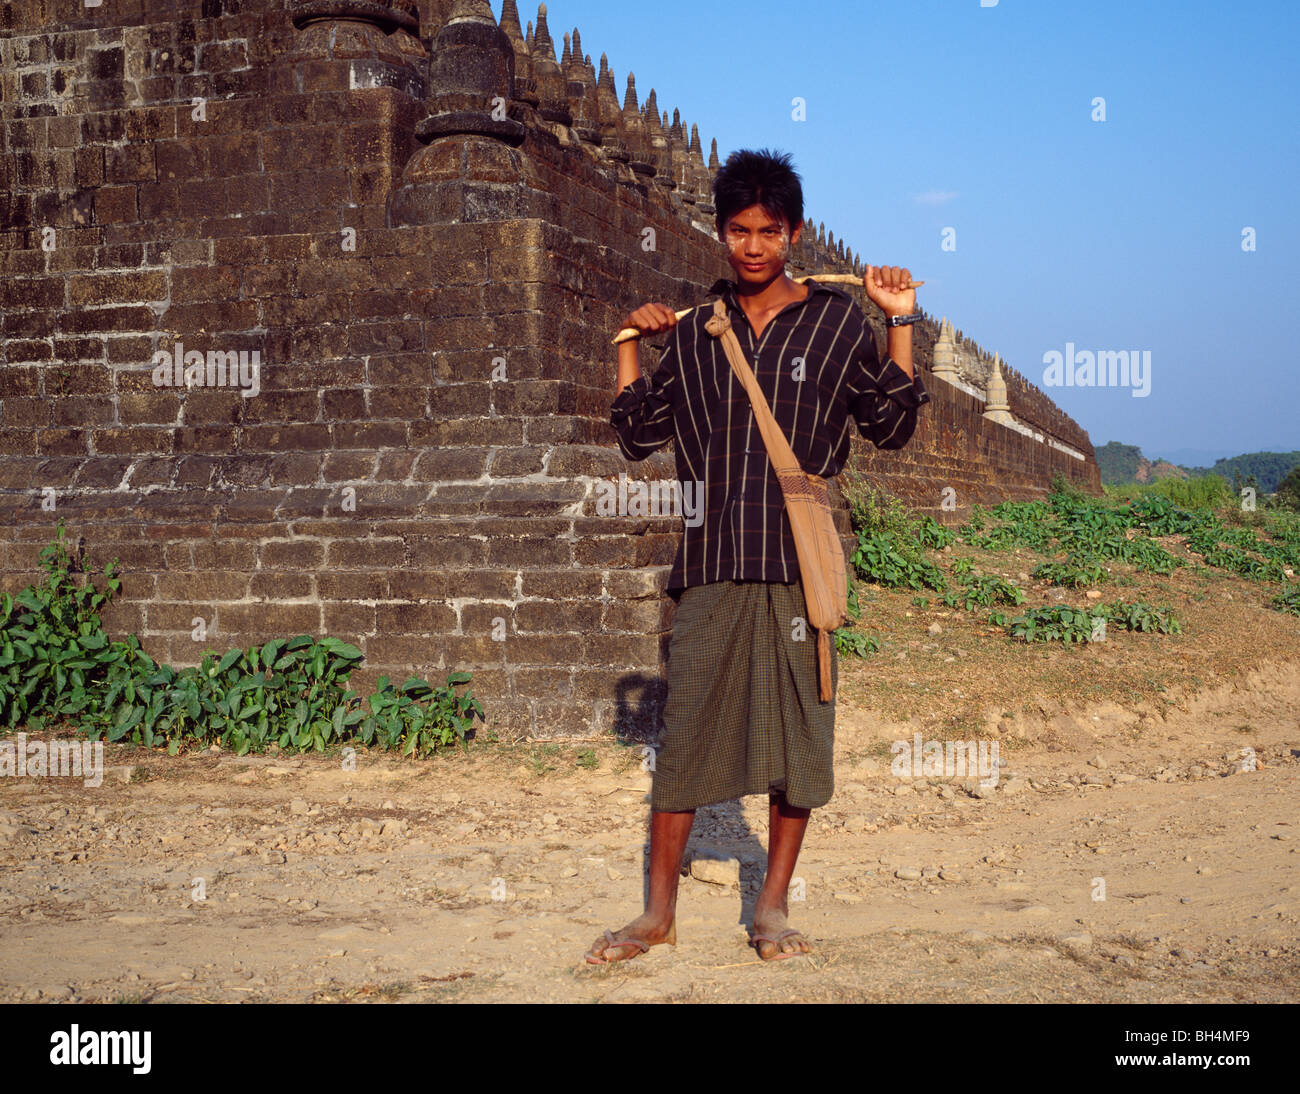 Young herder at Kothaung temple Hirtenjunge am Kothaung Tempel Mrauk-U Rakhaing State Myanmar Burma Stock Photo